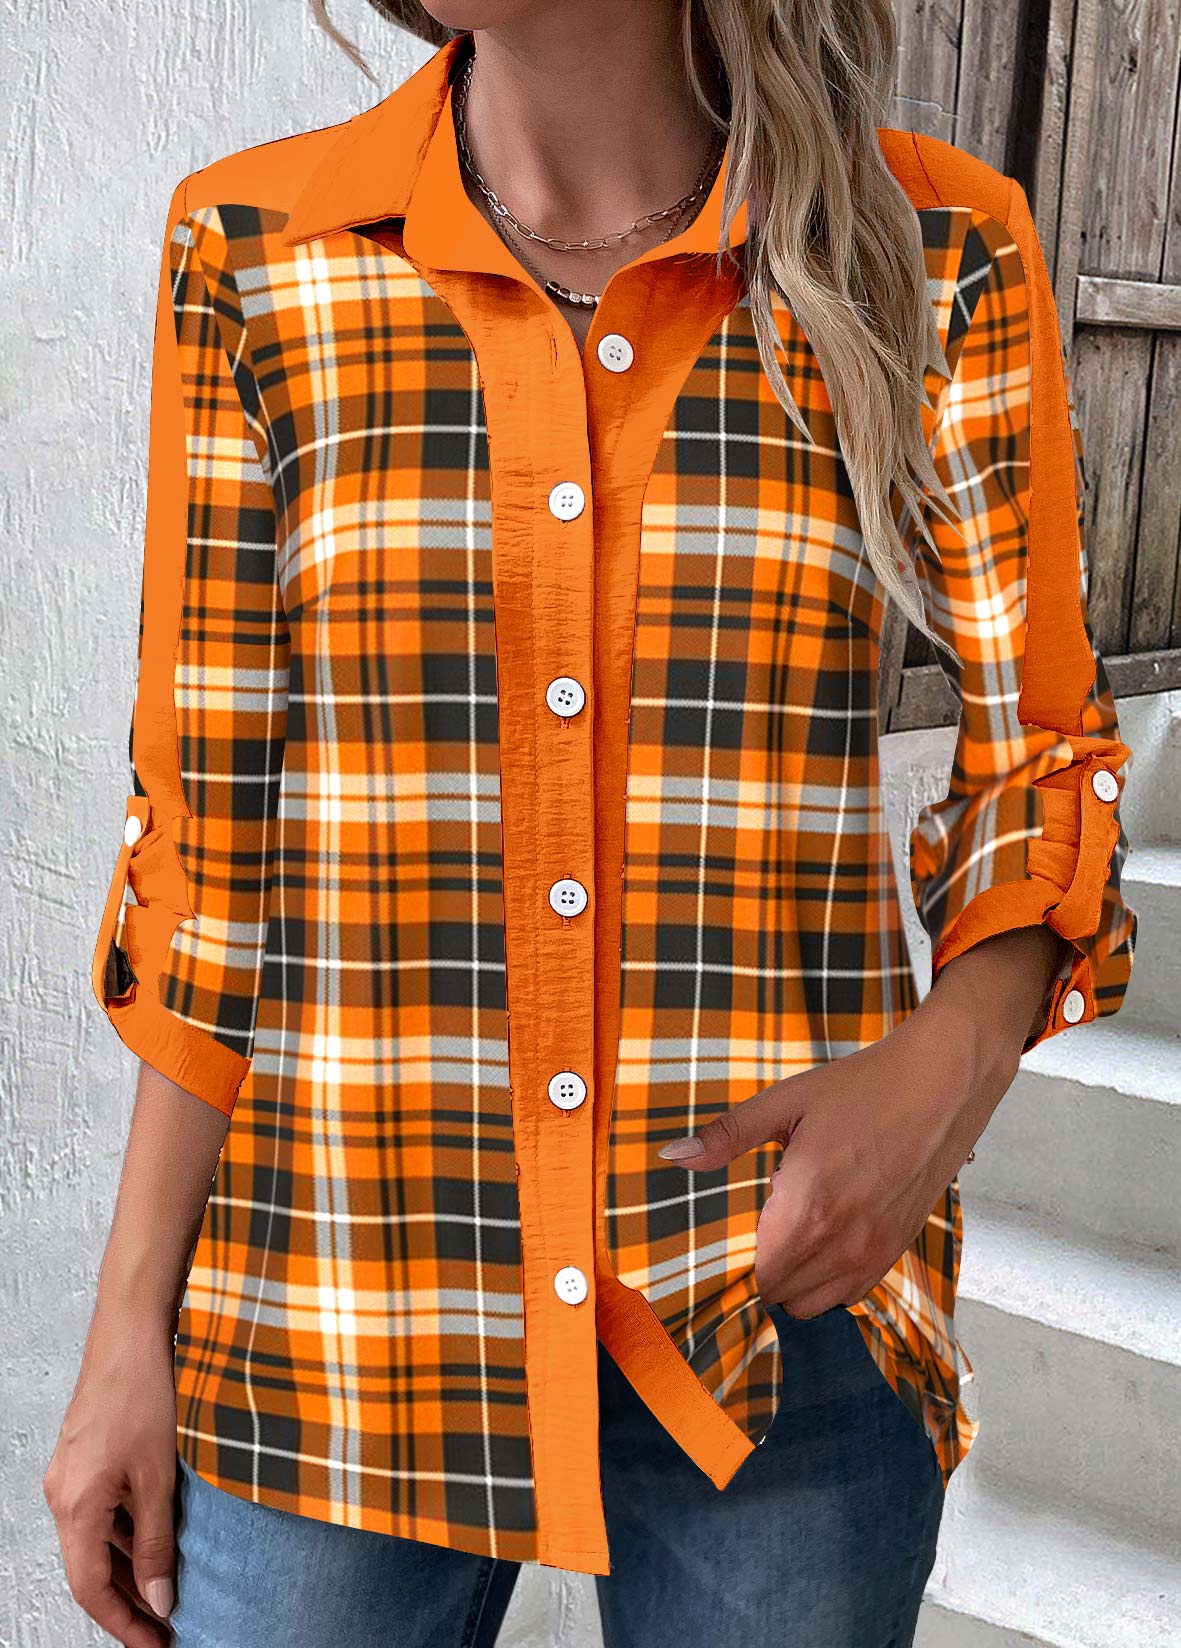 ROTITA Patchwork Plaid Orange Shirt Collar Long Sleeve Blouse